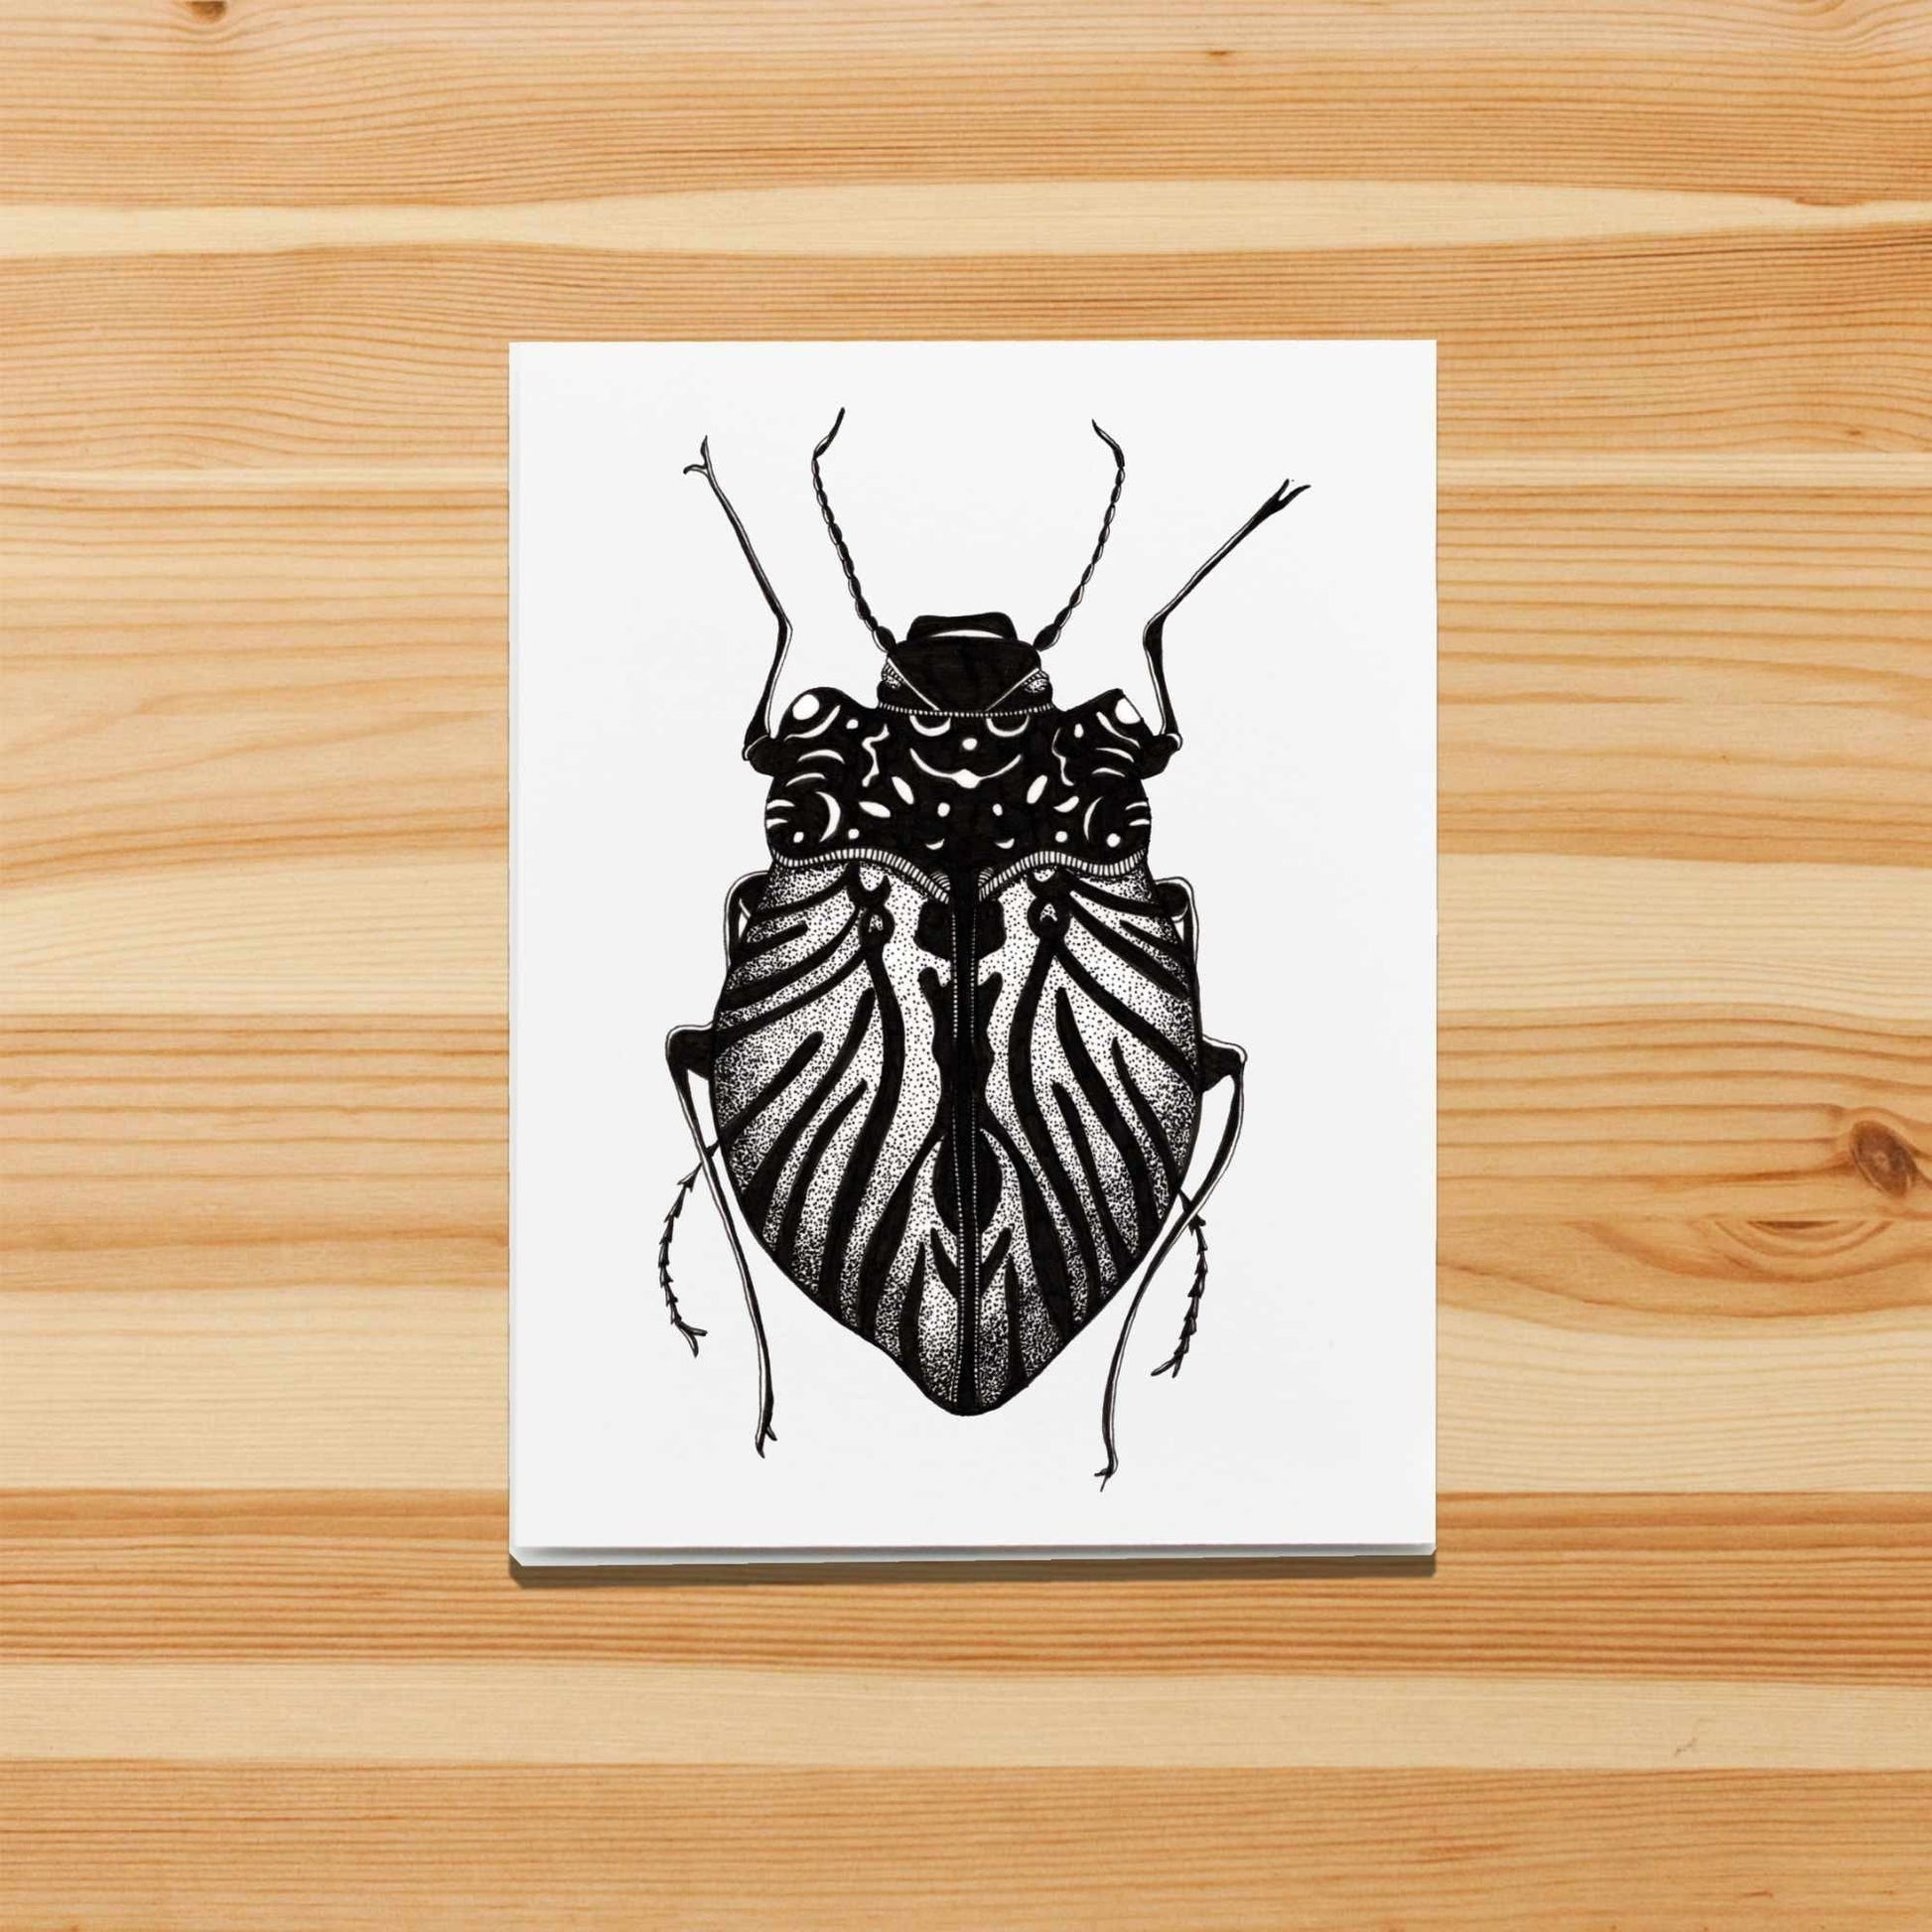 PinkPolish Design Note Cards "Beetle Inspiration" Handmade Notecard